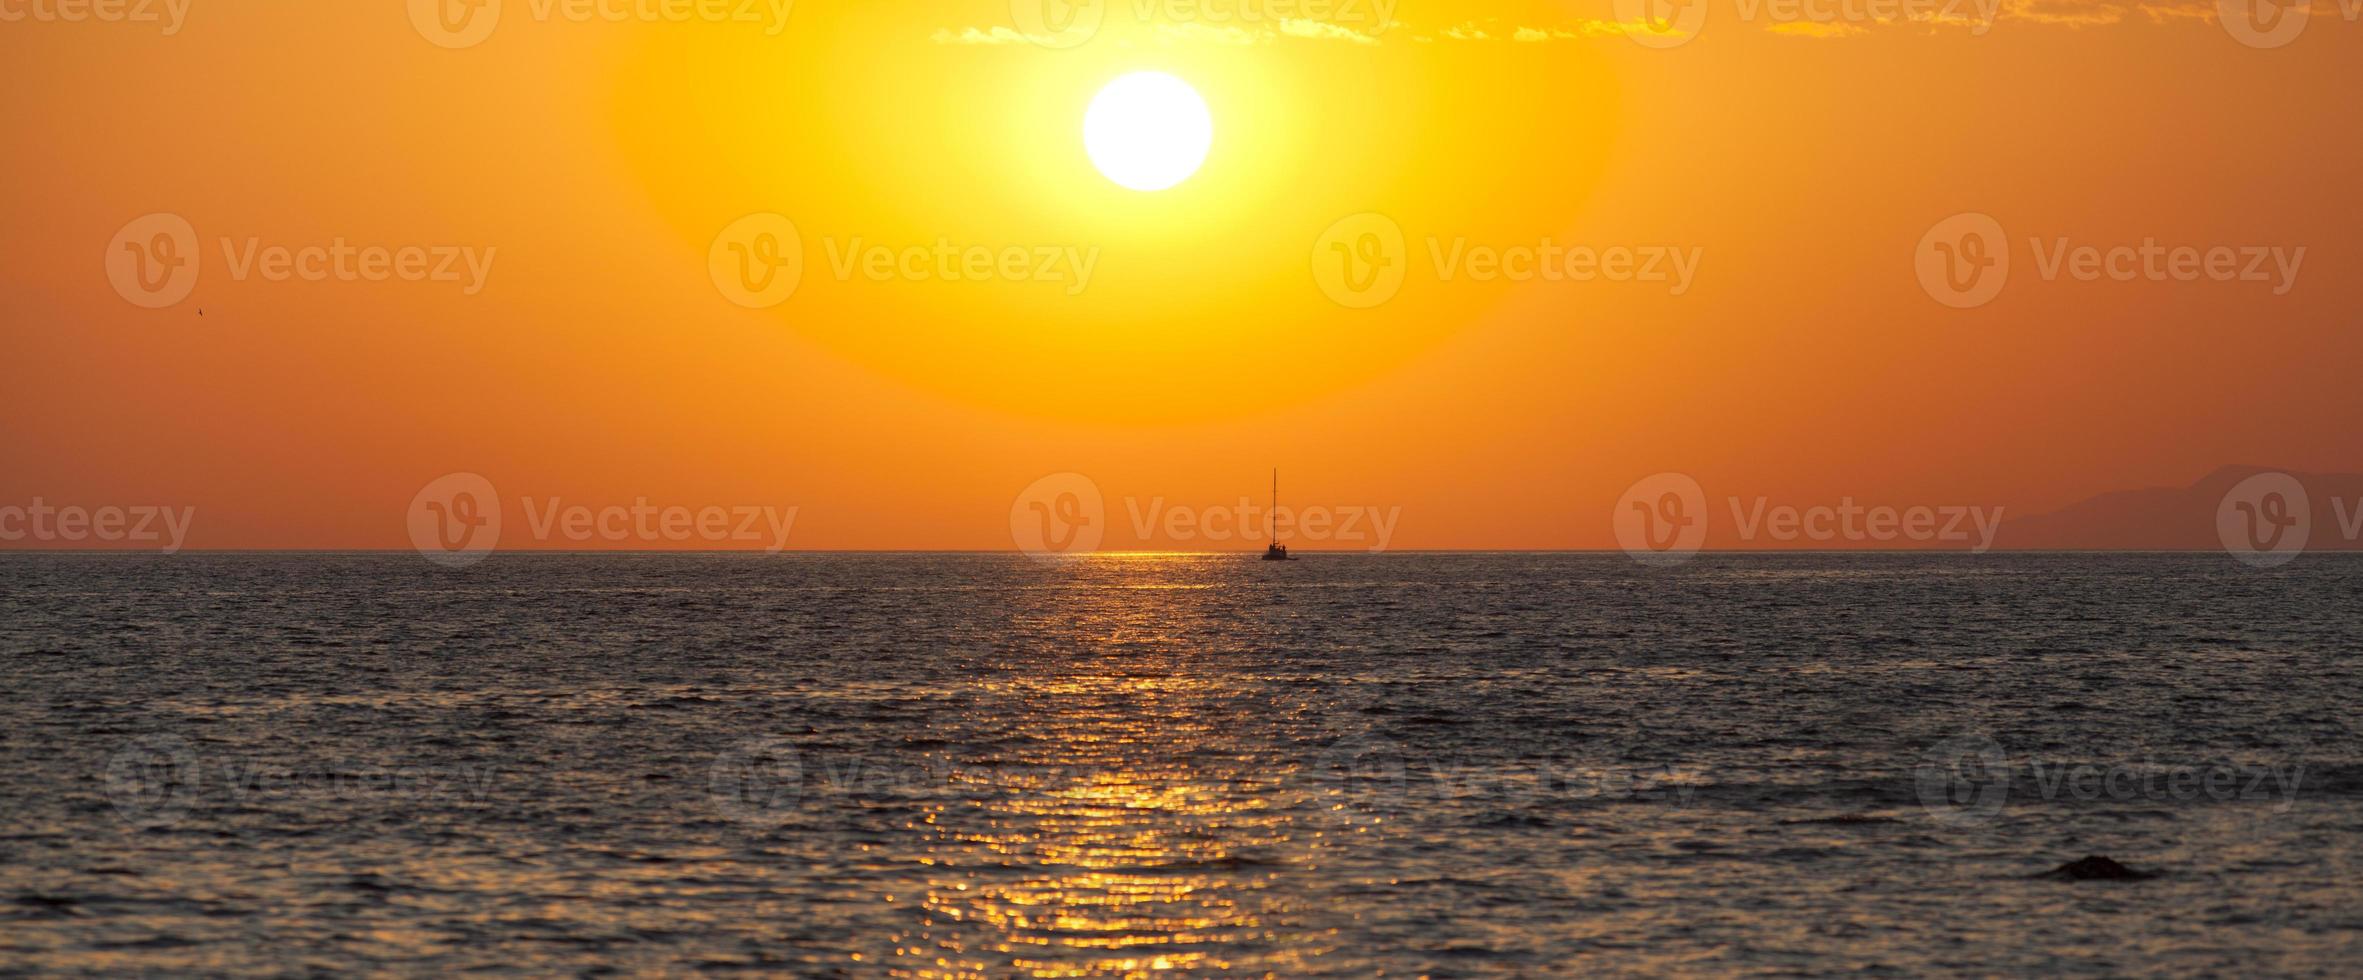 amazin gryning bakgrund med fartyg och seaguls foto